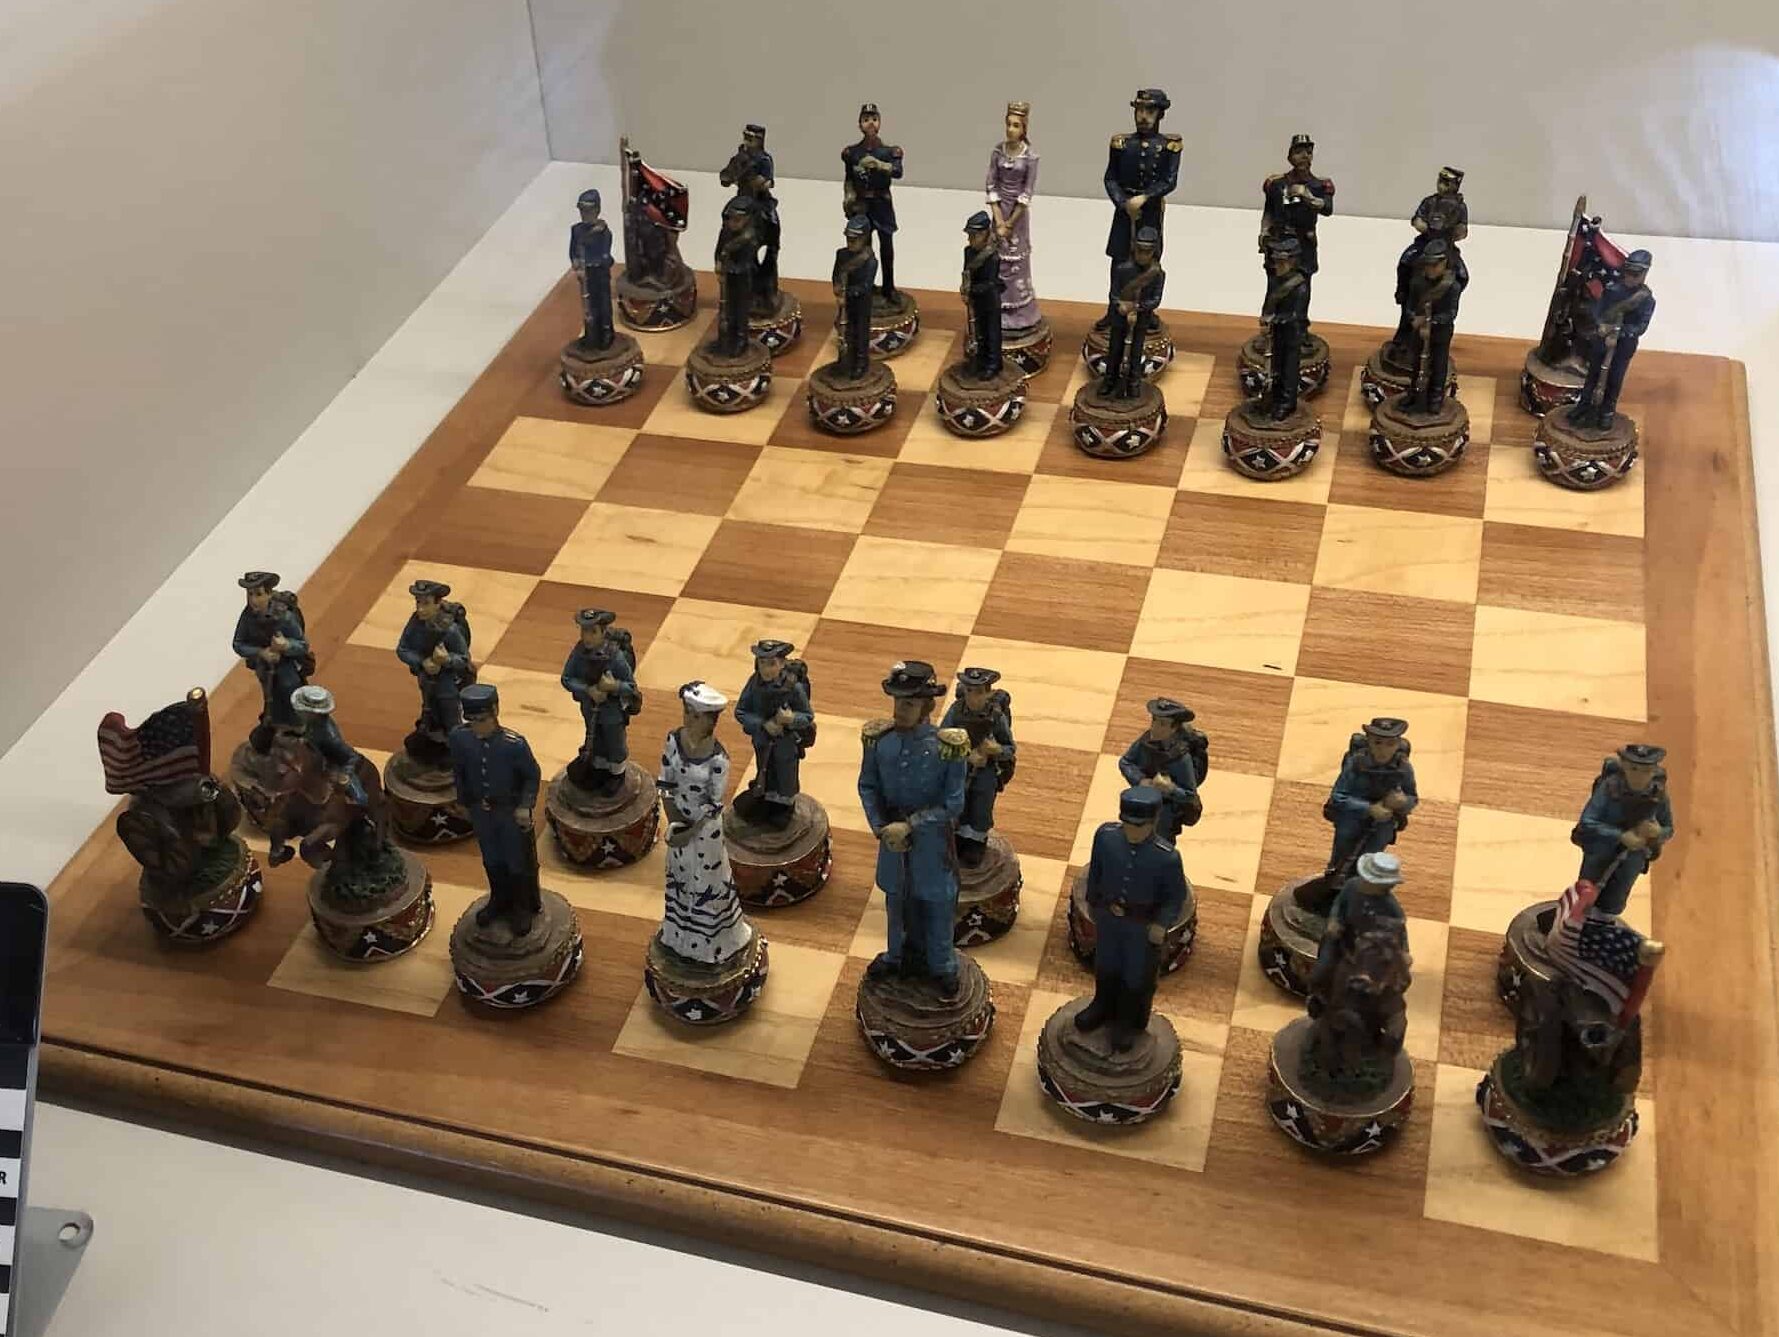 American Civil War chess set (USA) at the Gökyay Foundation Chess Museum in Ankara, Turkey